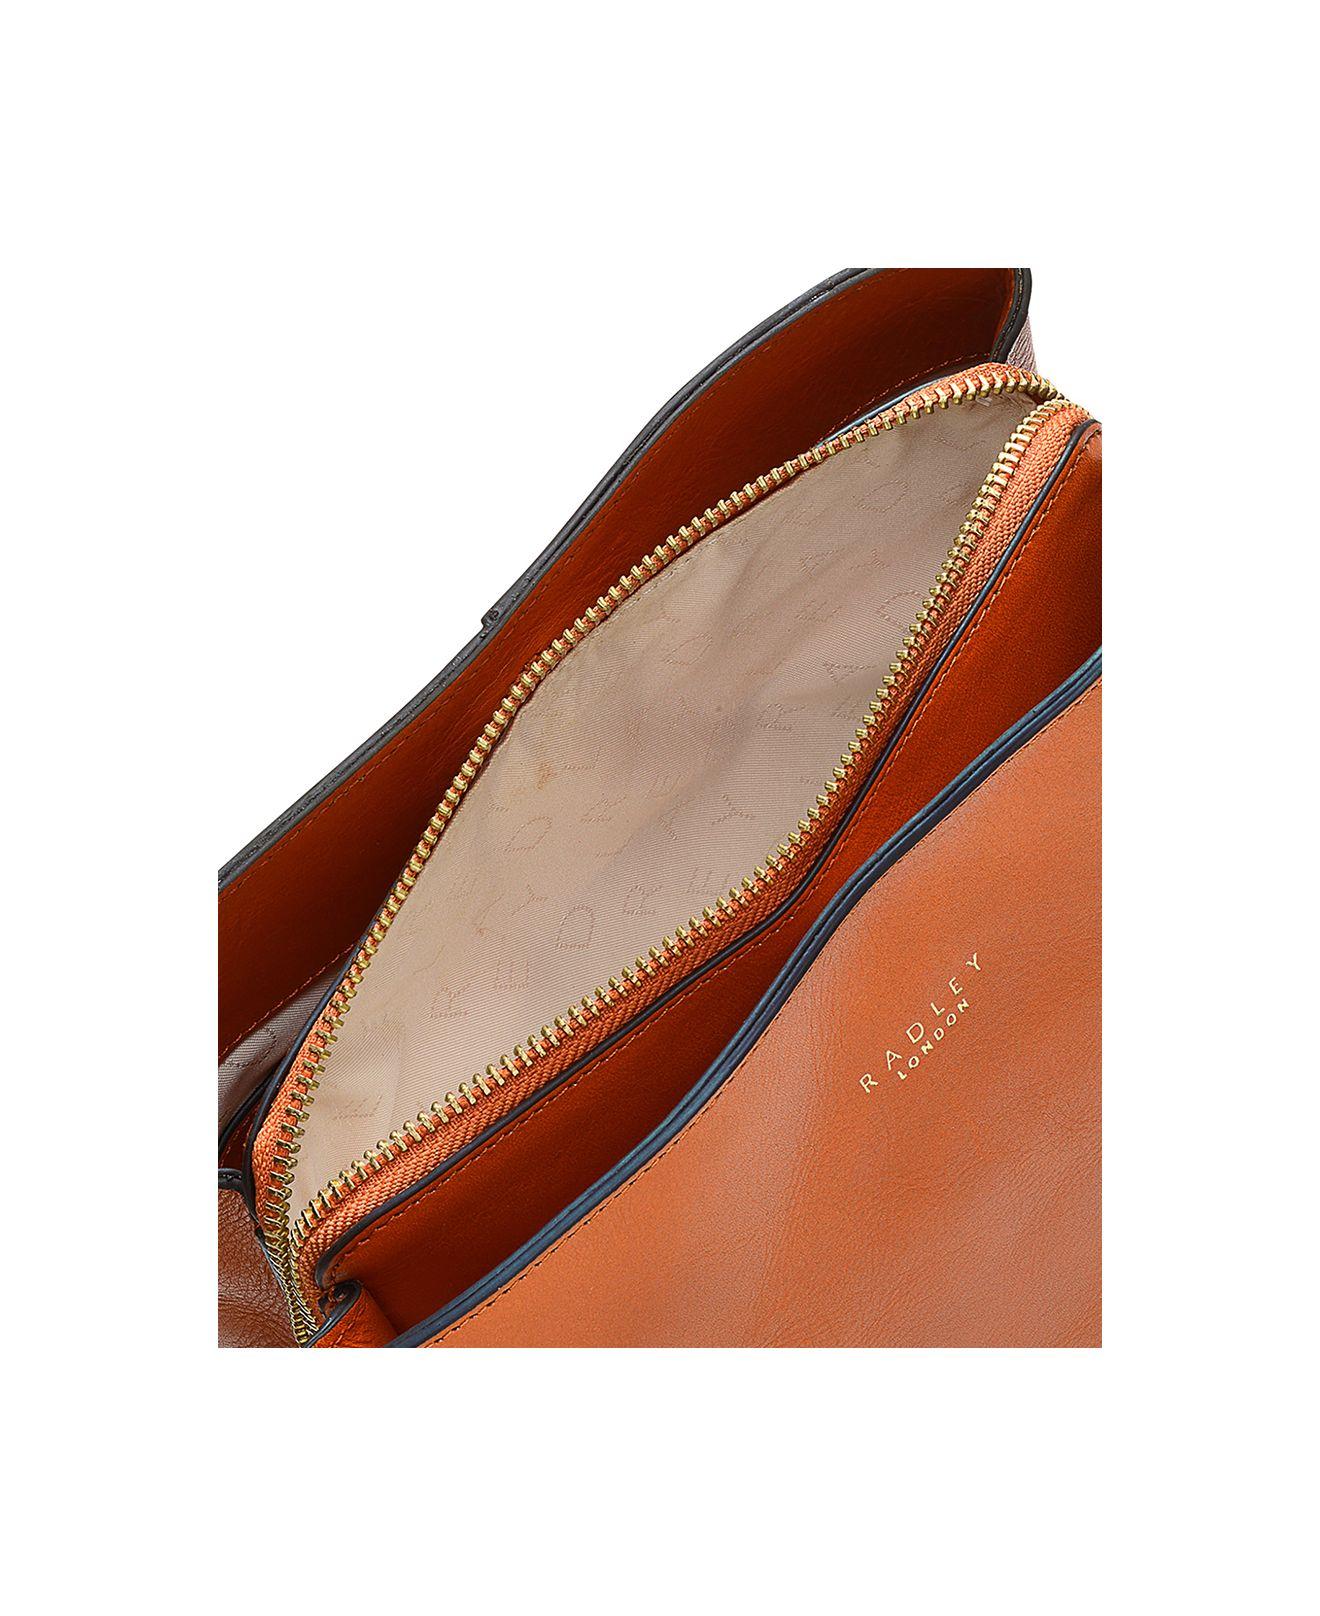 Radley Medium Dukes Place Leather Shoulder Bag in Brown